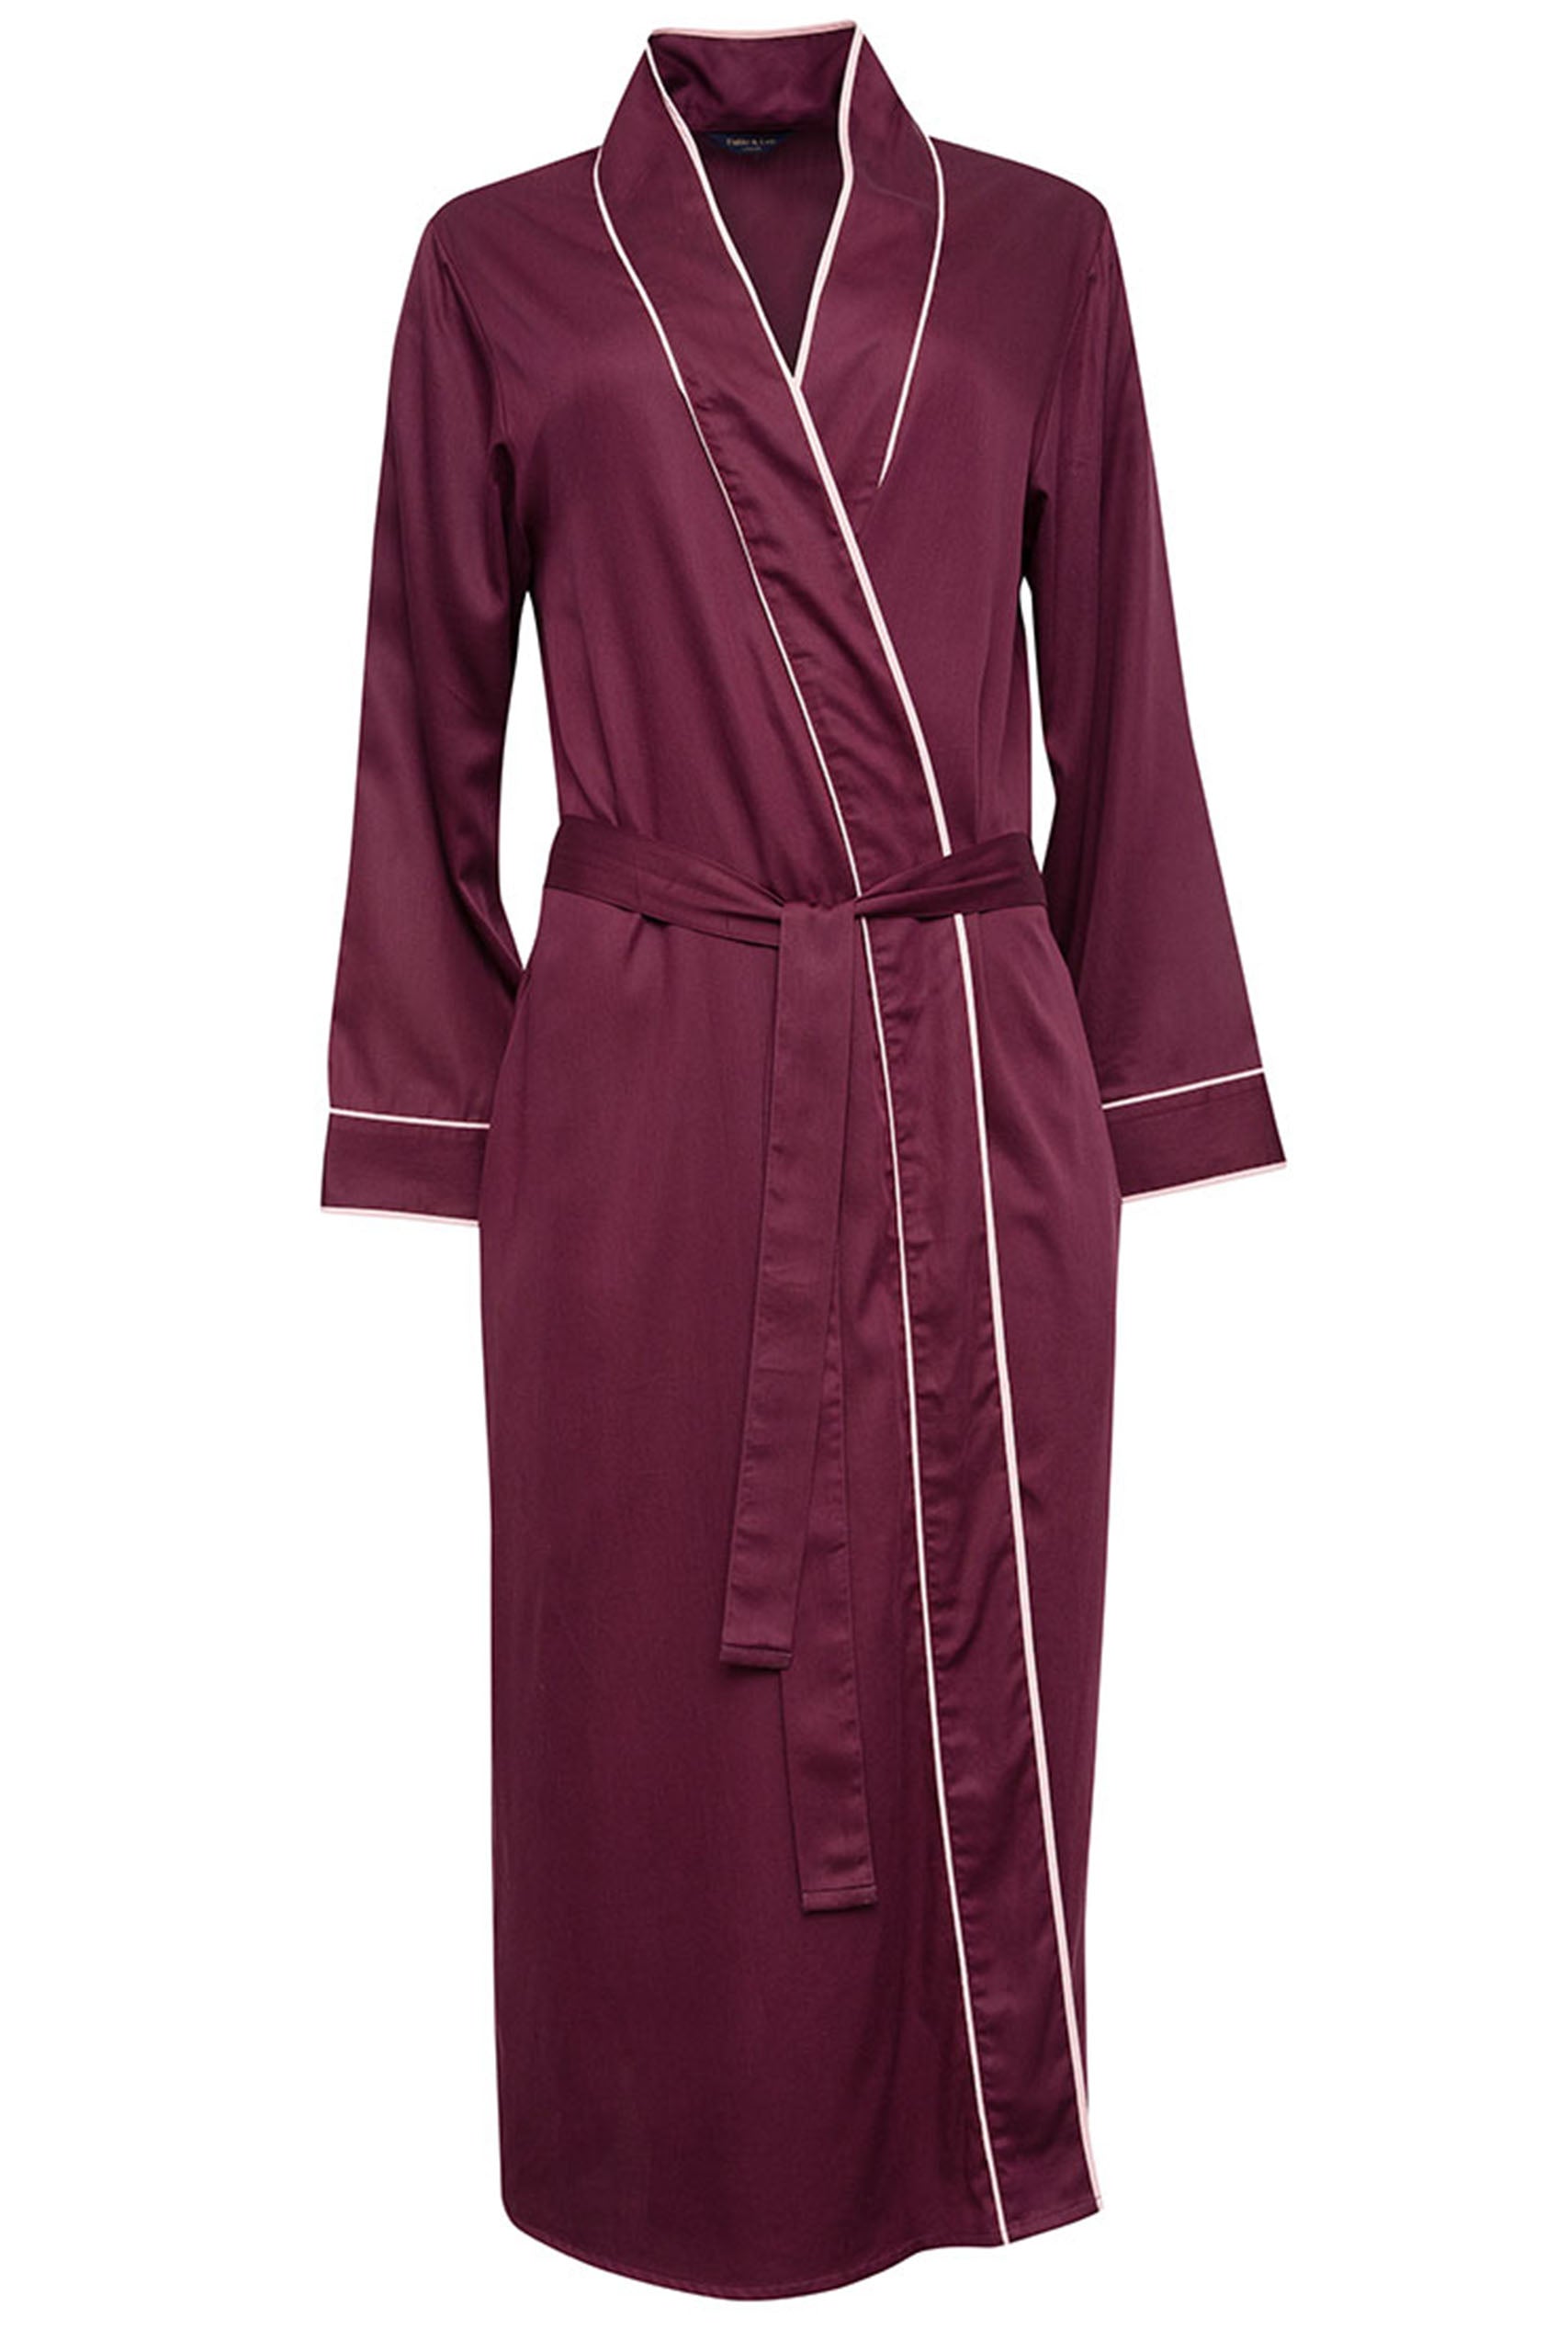 burgundy long dressing gown